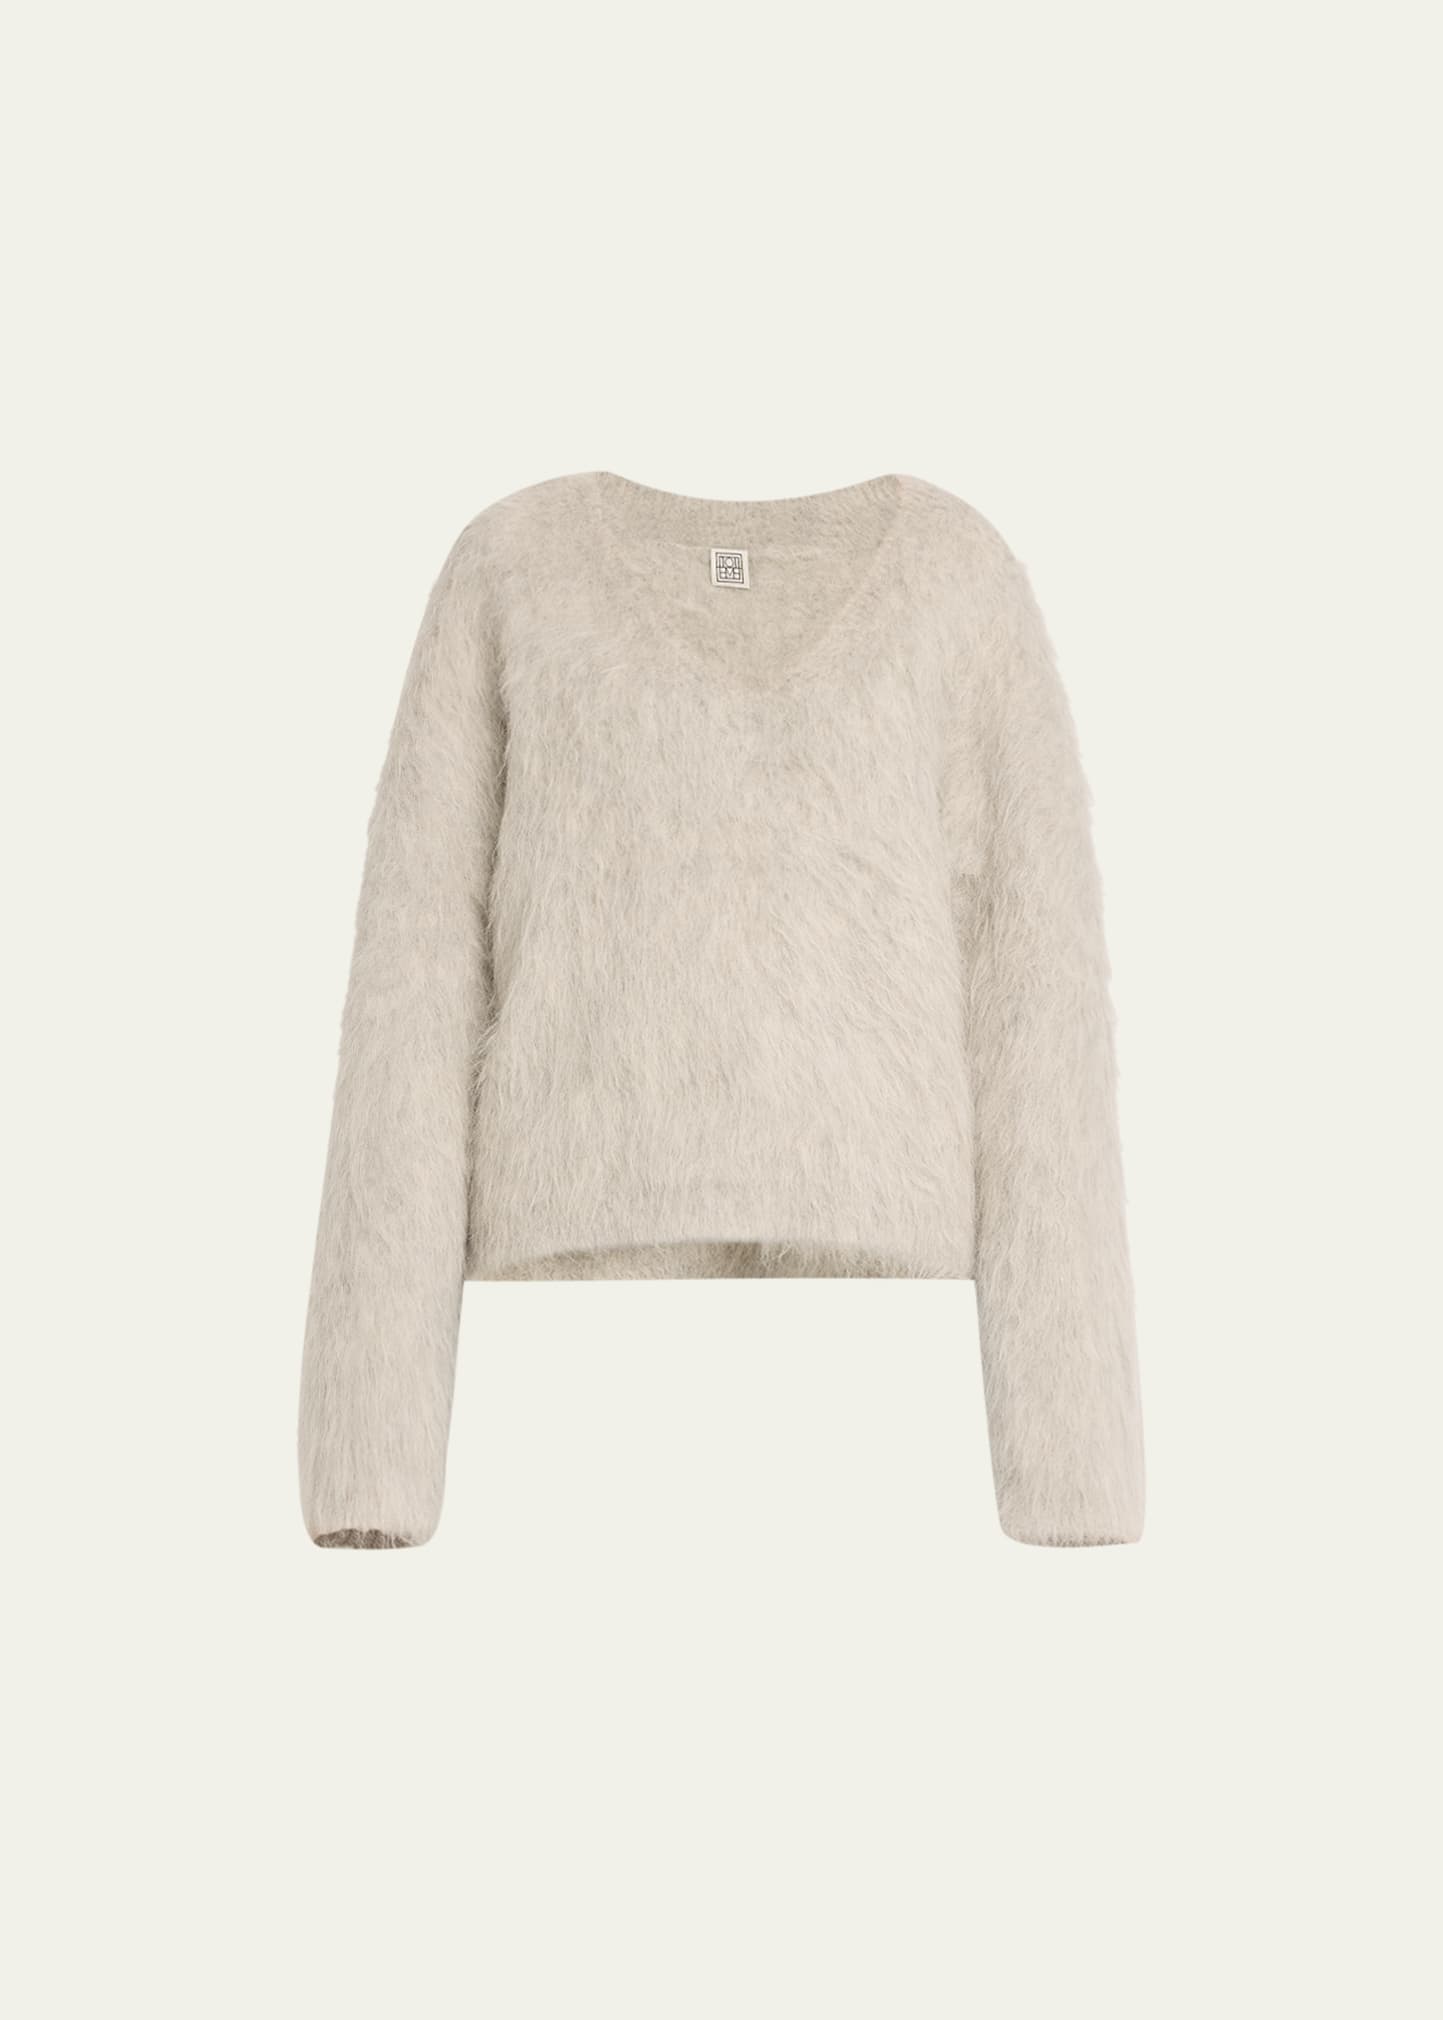 Fuzzy Petite Boxy Alpaca-Blend Sweater